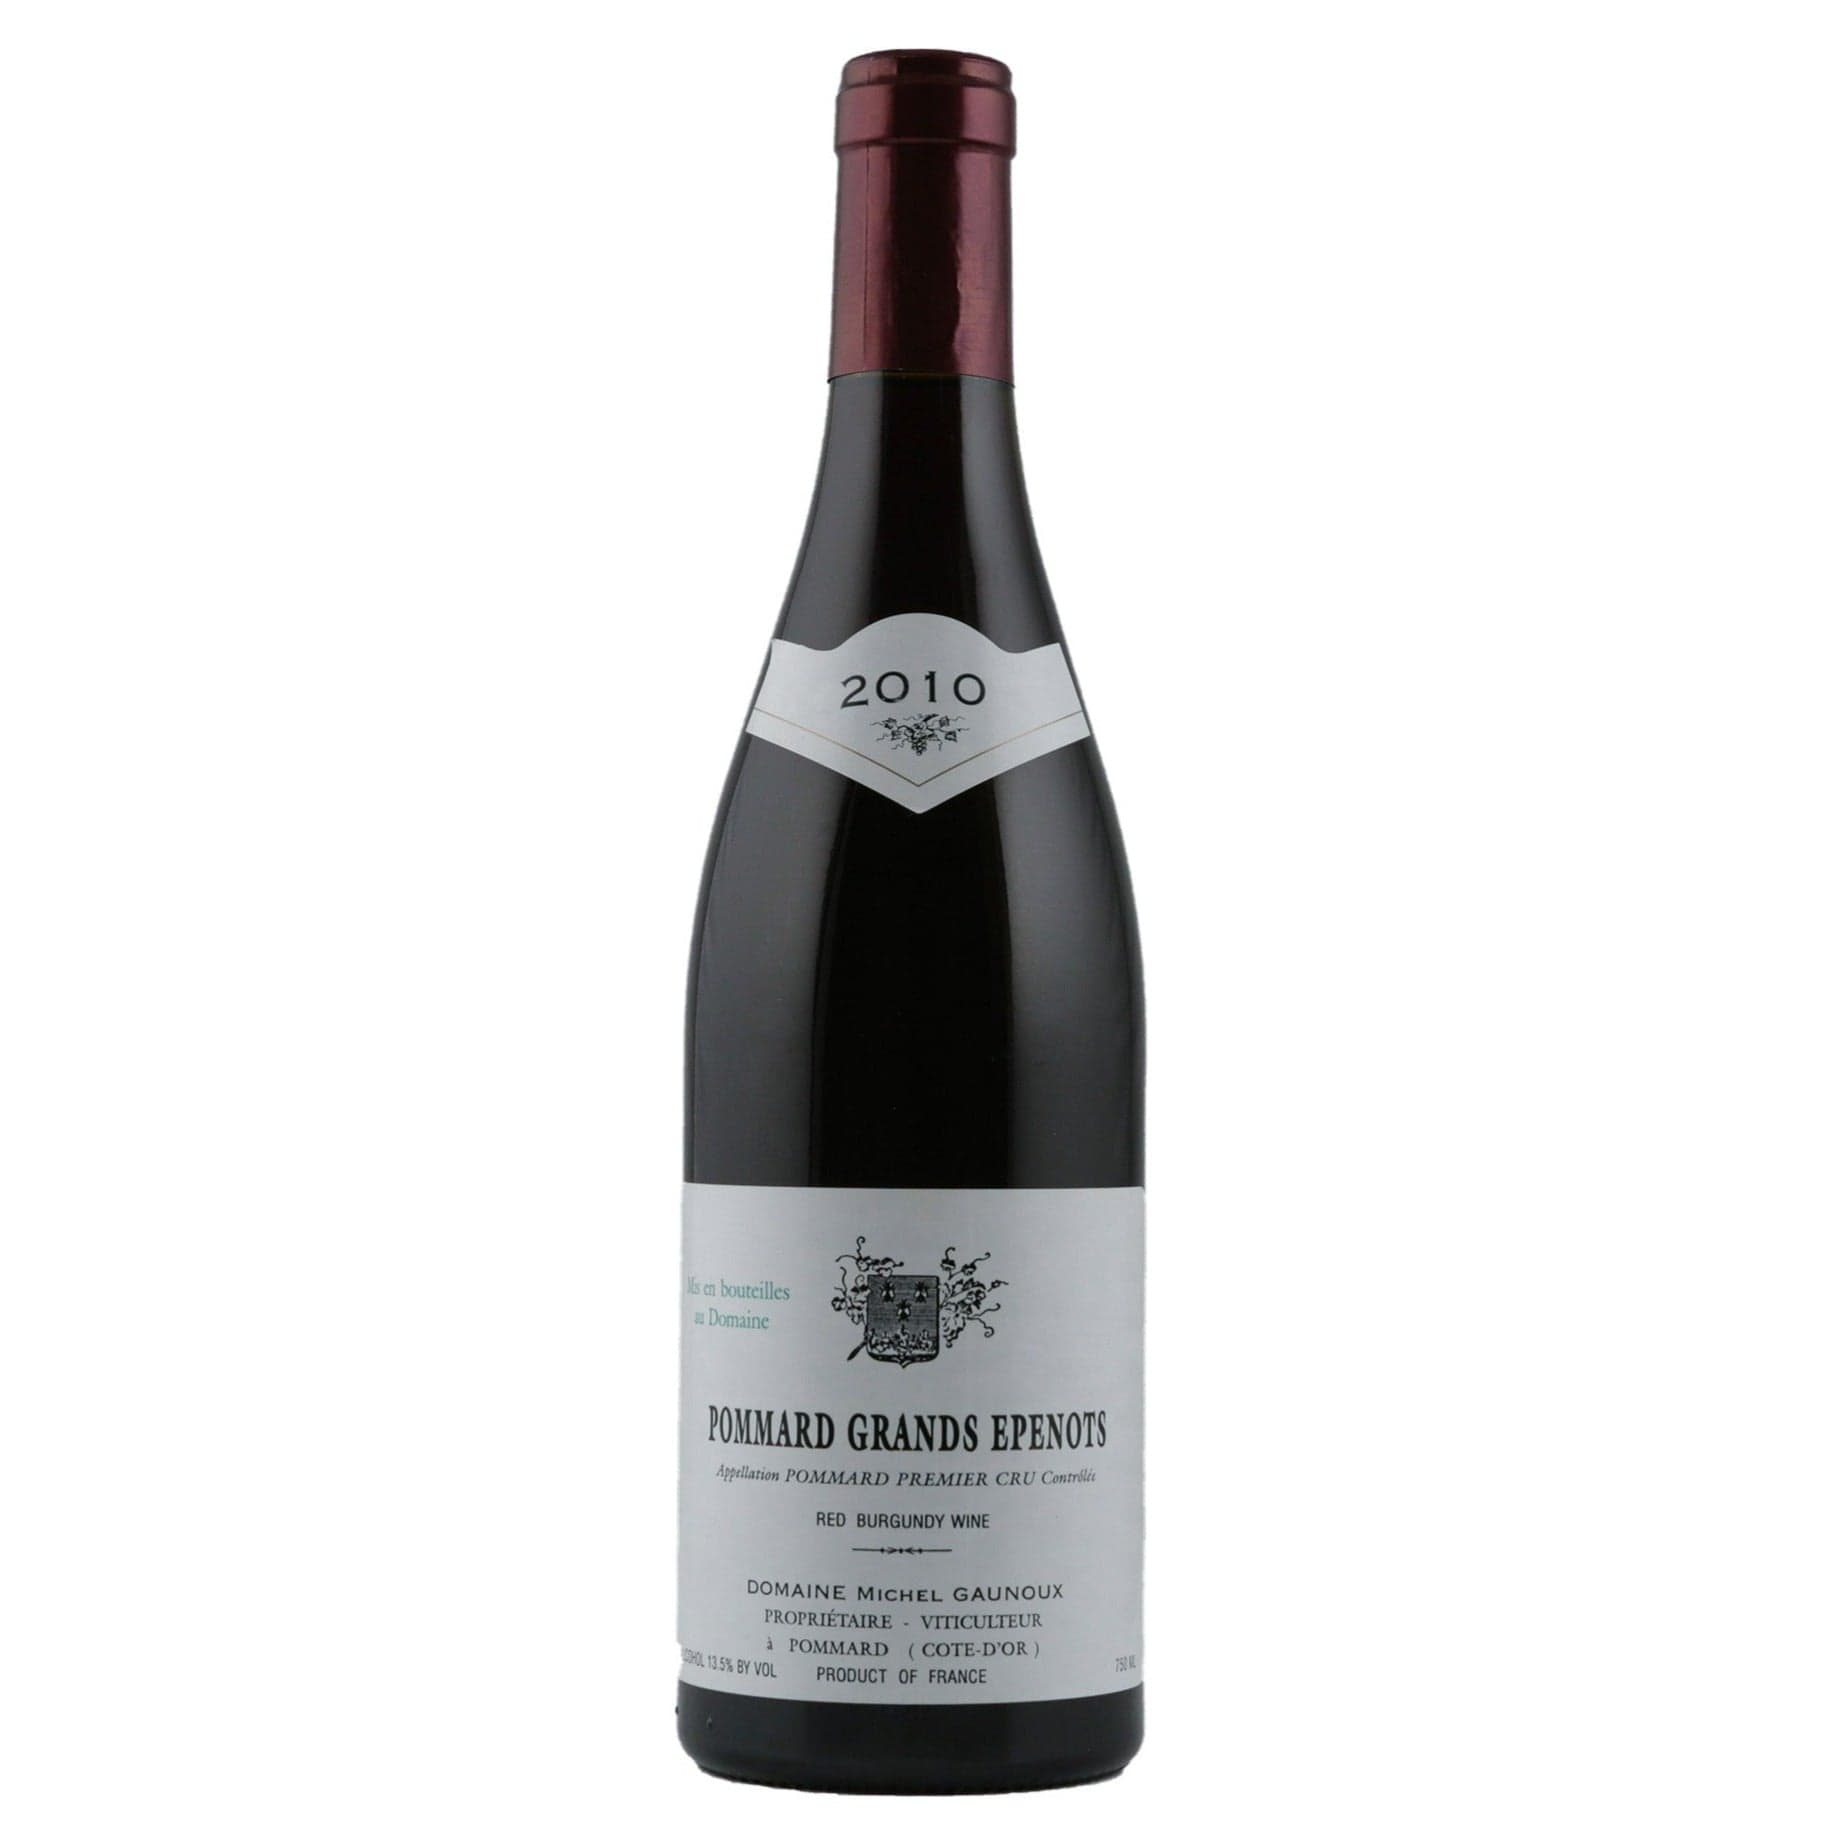 Single bottle of Red wine Dom. Michel Gaunoux, Les Grands Epenots Premier Cru, Pommard, 2010 100% Pinot Noir